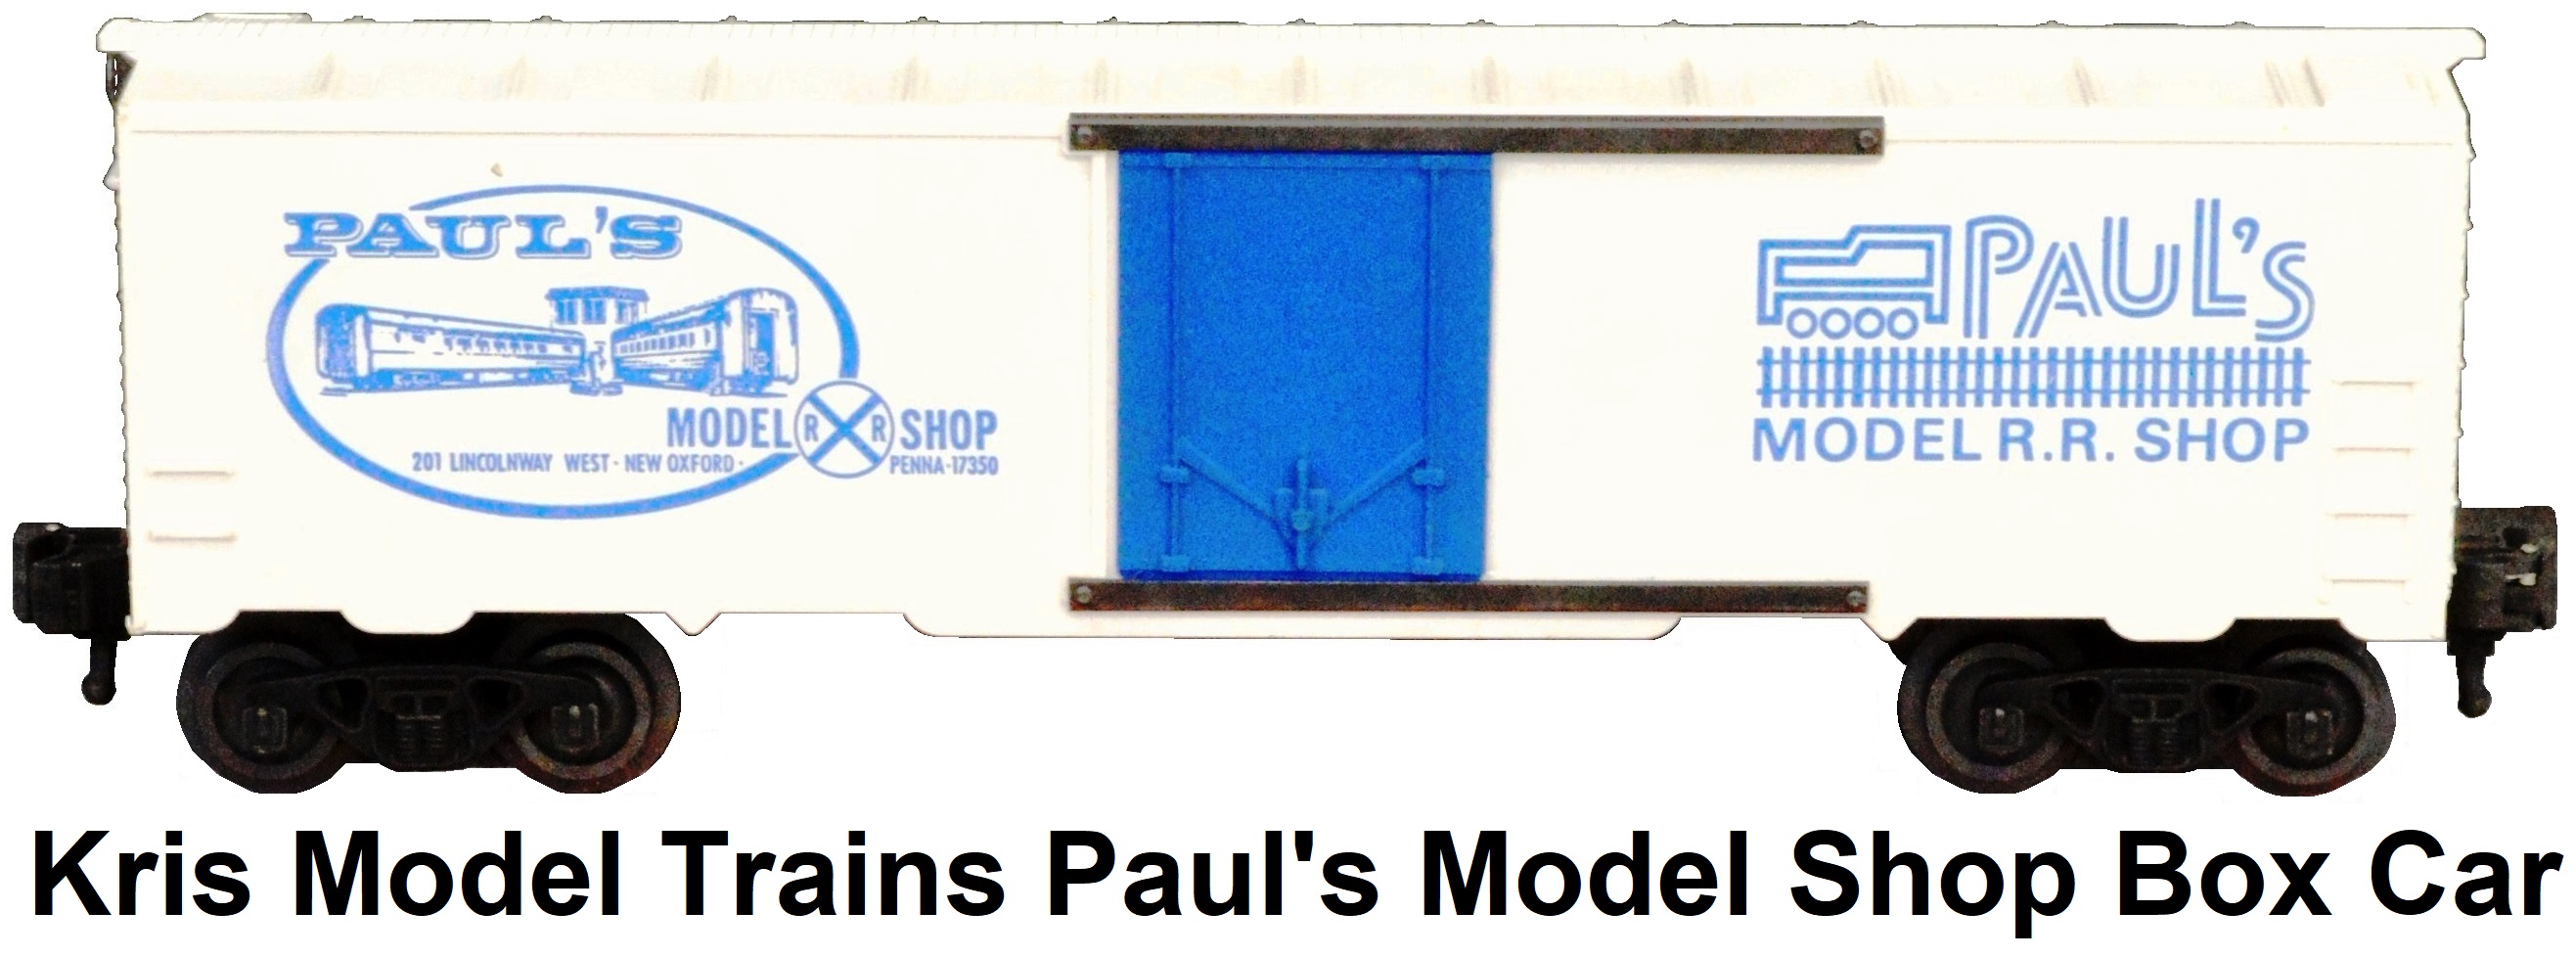 Kris Model Trains Paul's Model R.R. Shop Box Car